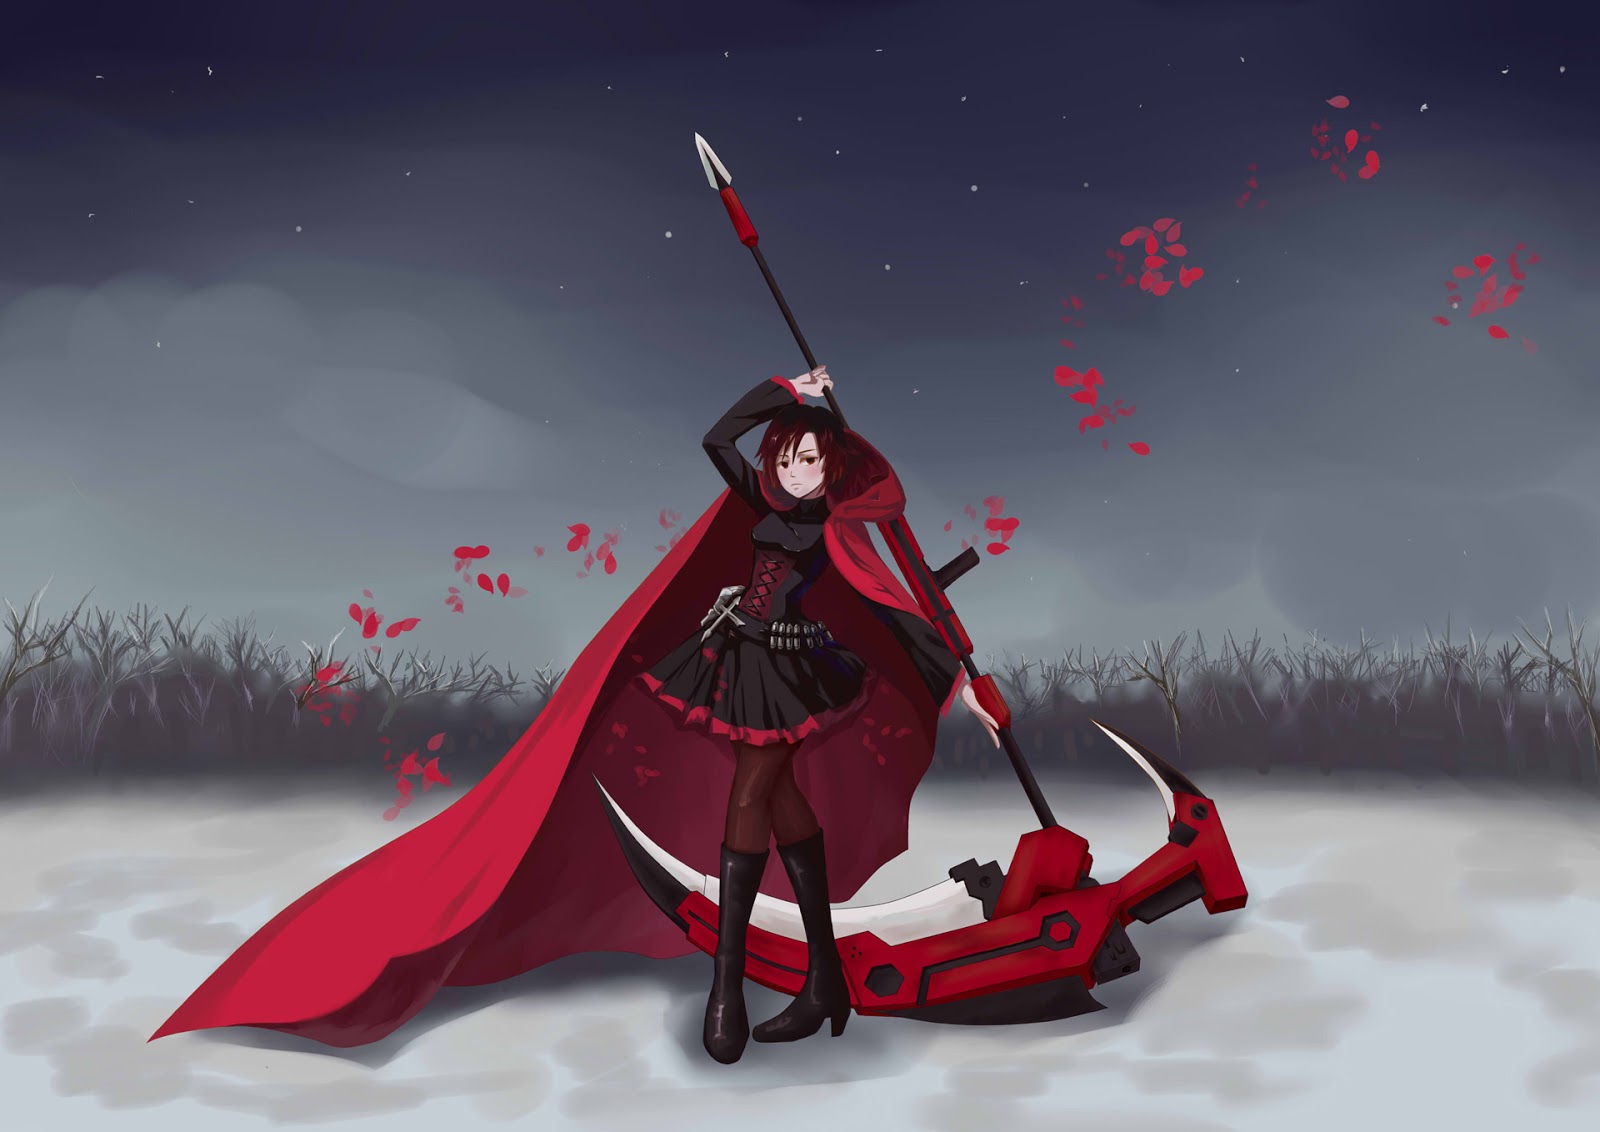 Rose Rwby Anime Girl Red Cape Death Scythe Black Dress HD Wallpaper